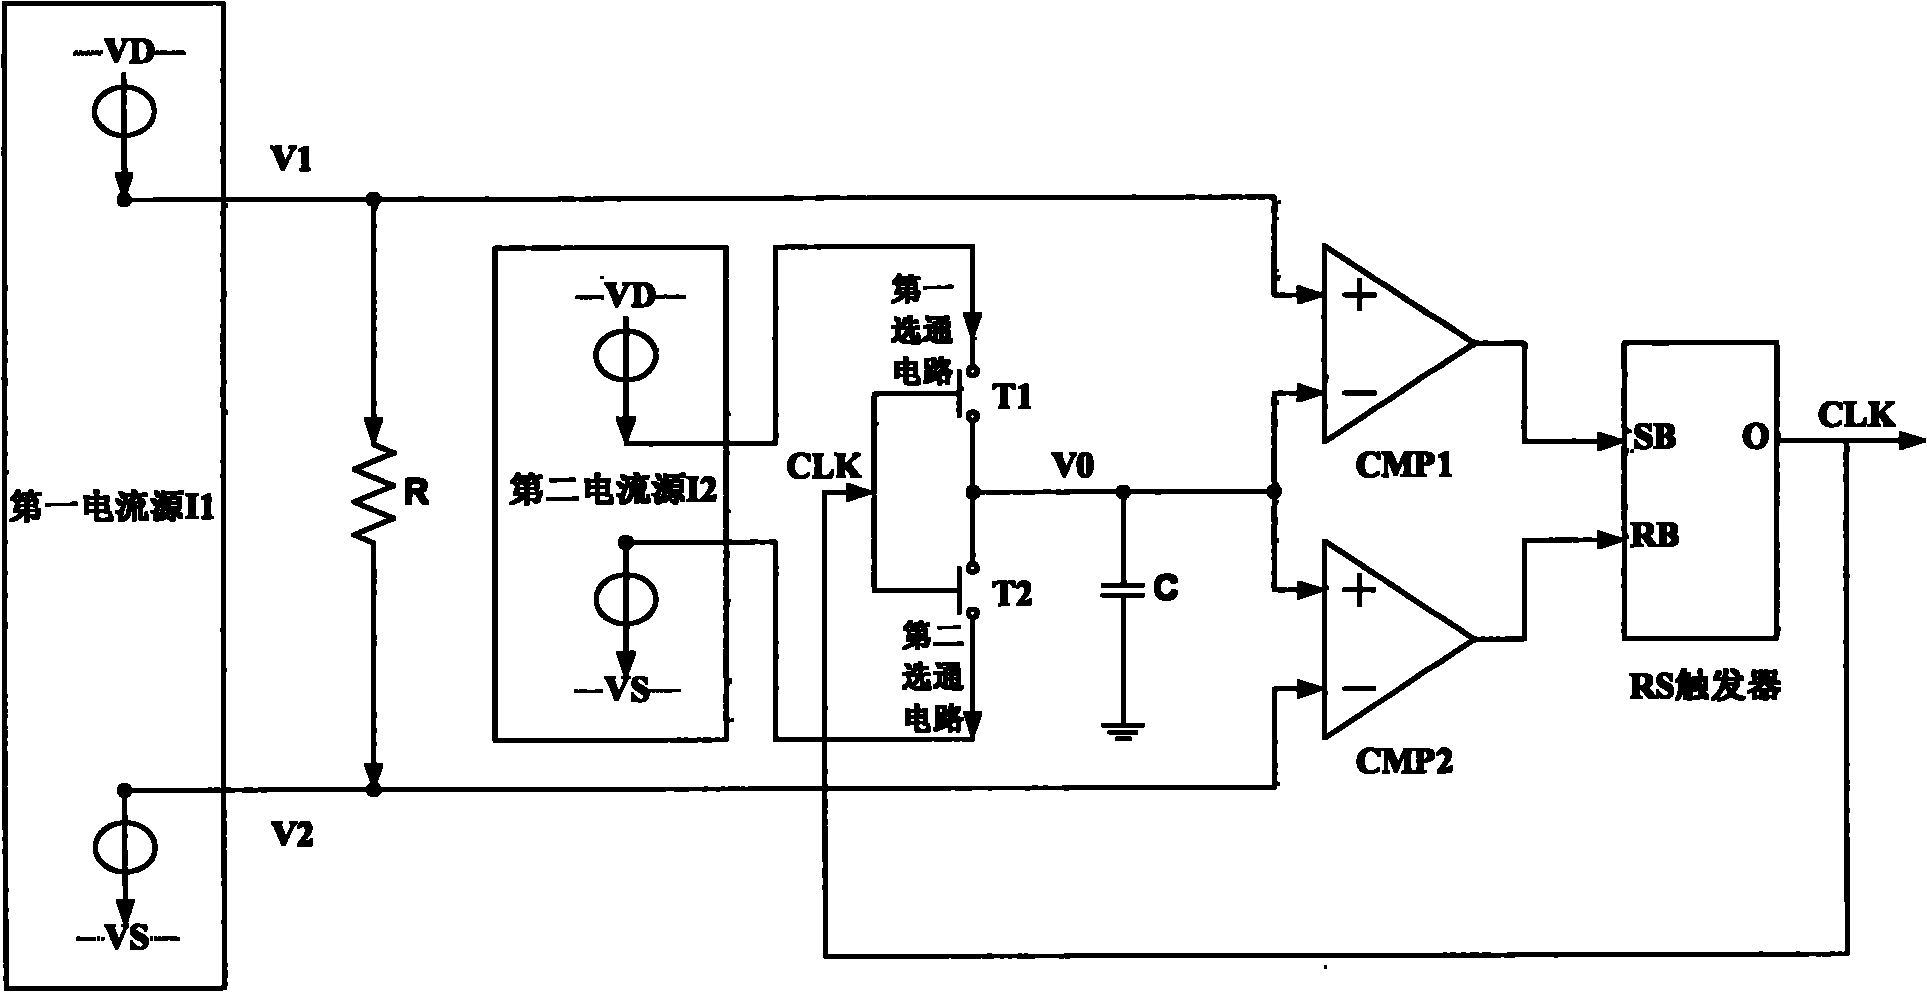 Clock generating circuit